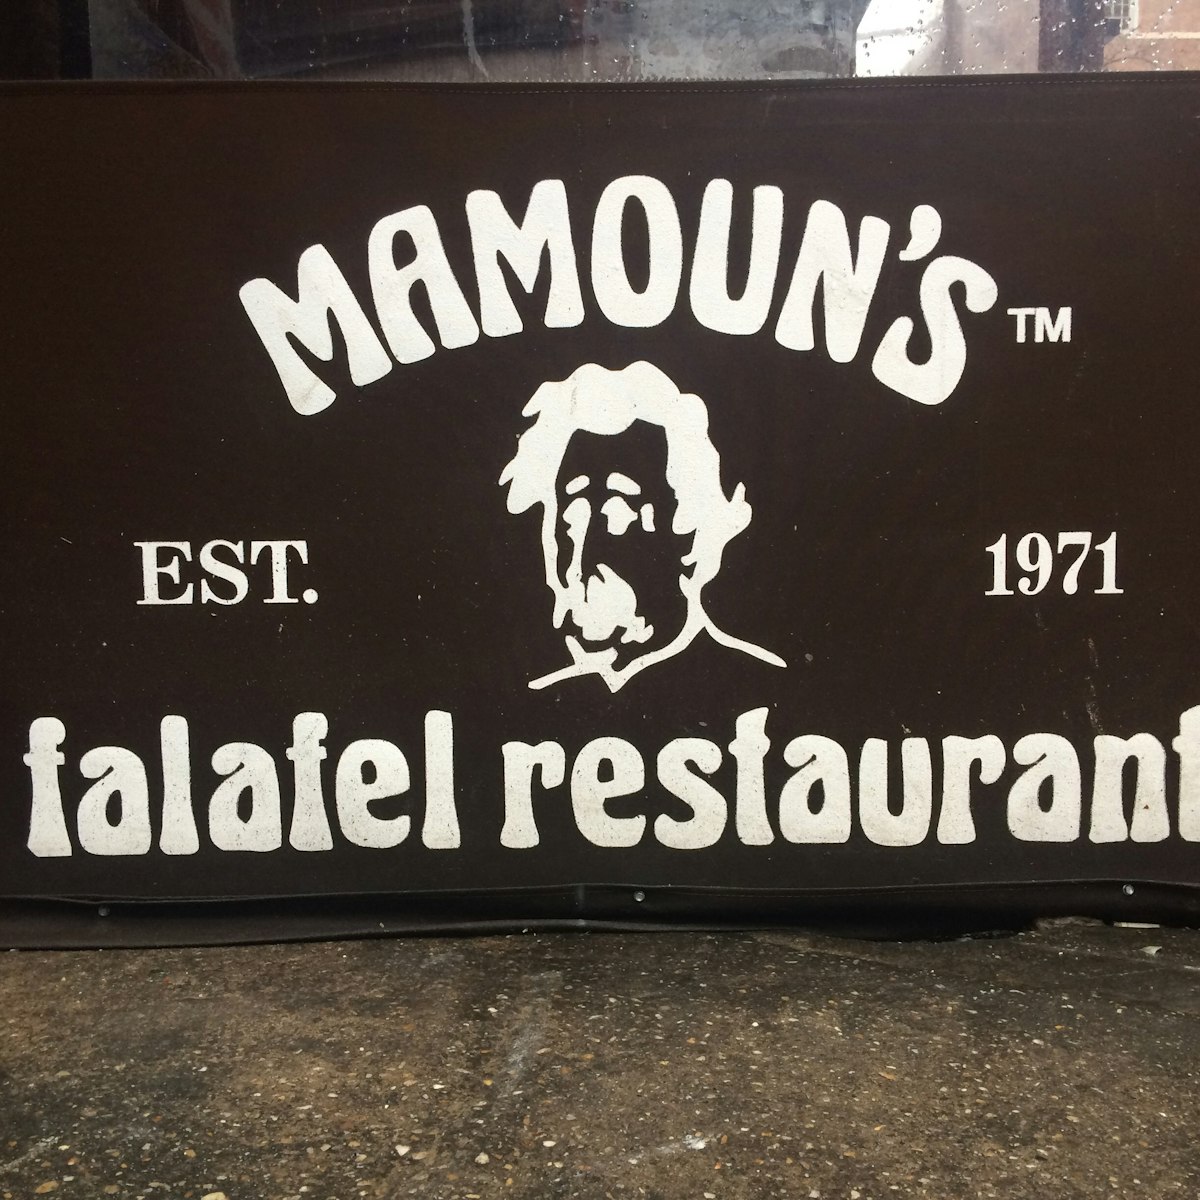 One of the logos outisde of Mamoun's.